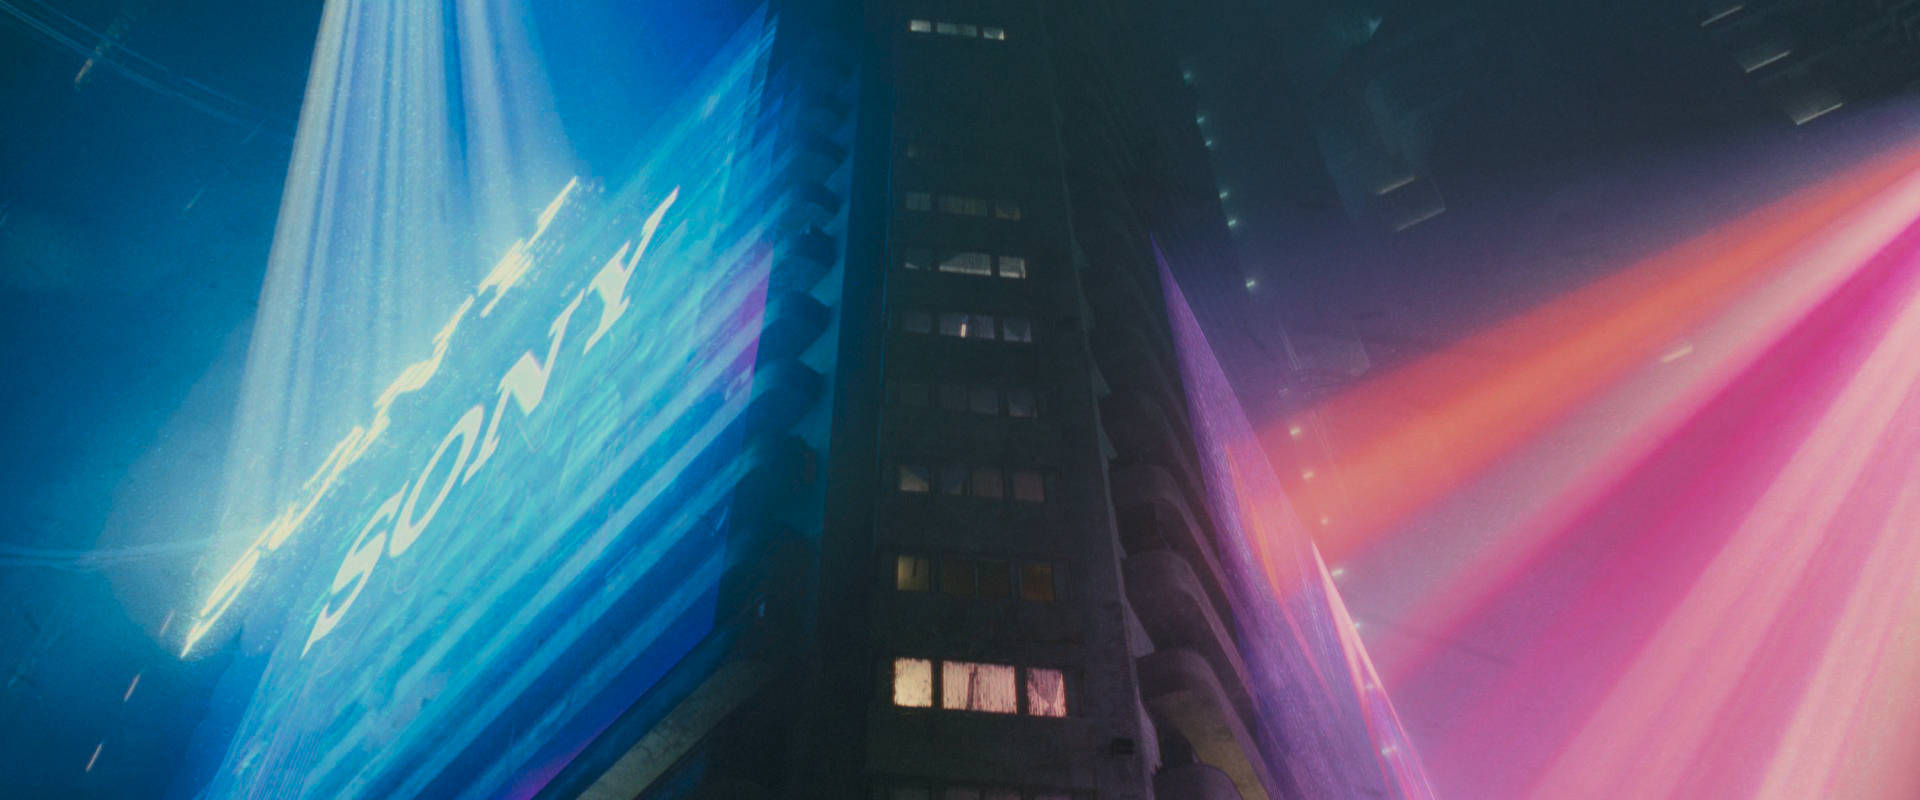 Blade Runner 2049 Sonny Holographic Ad Background